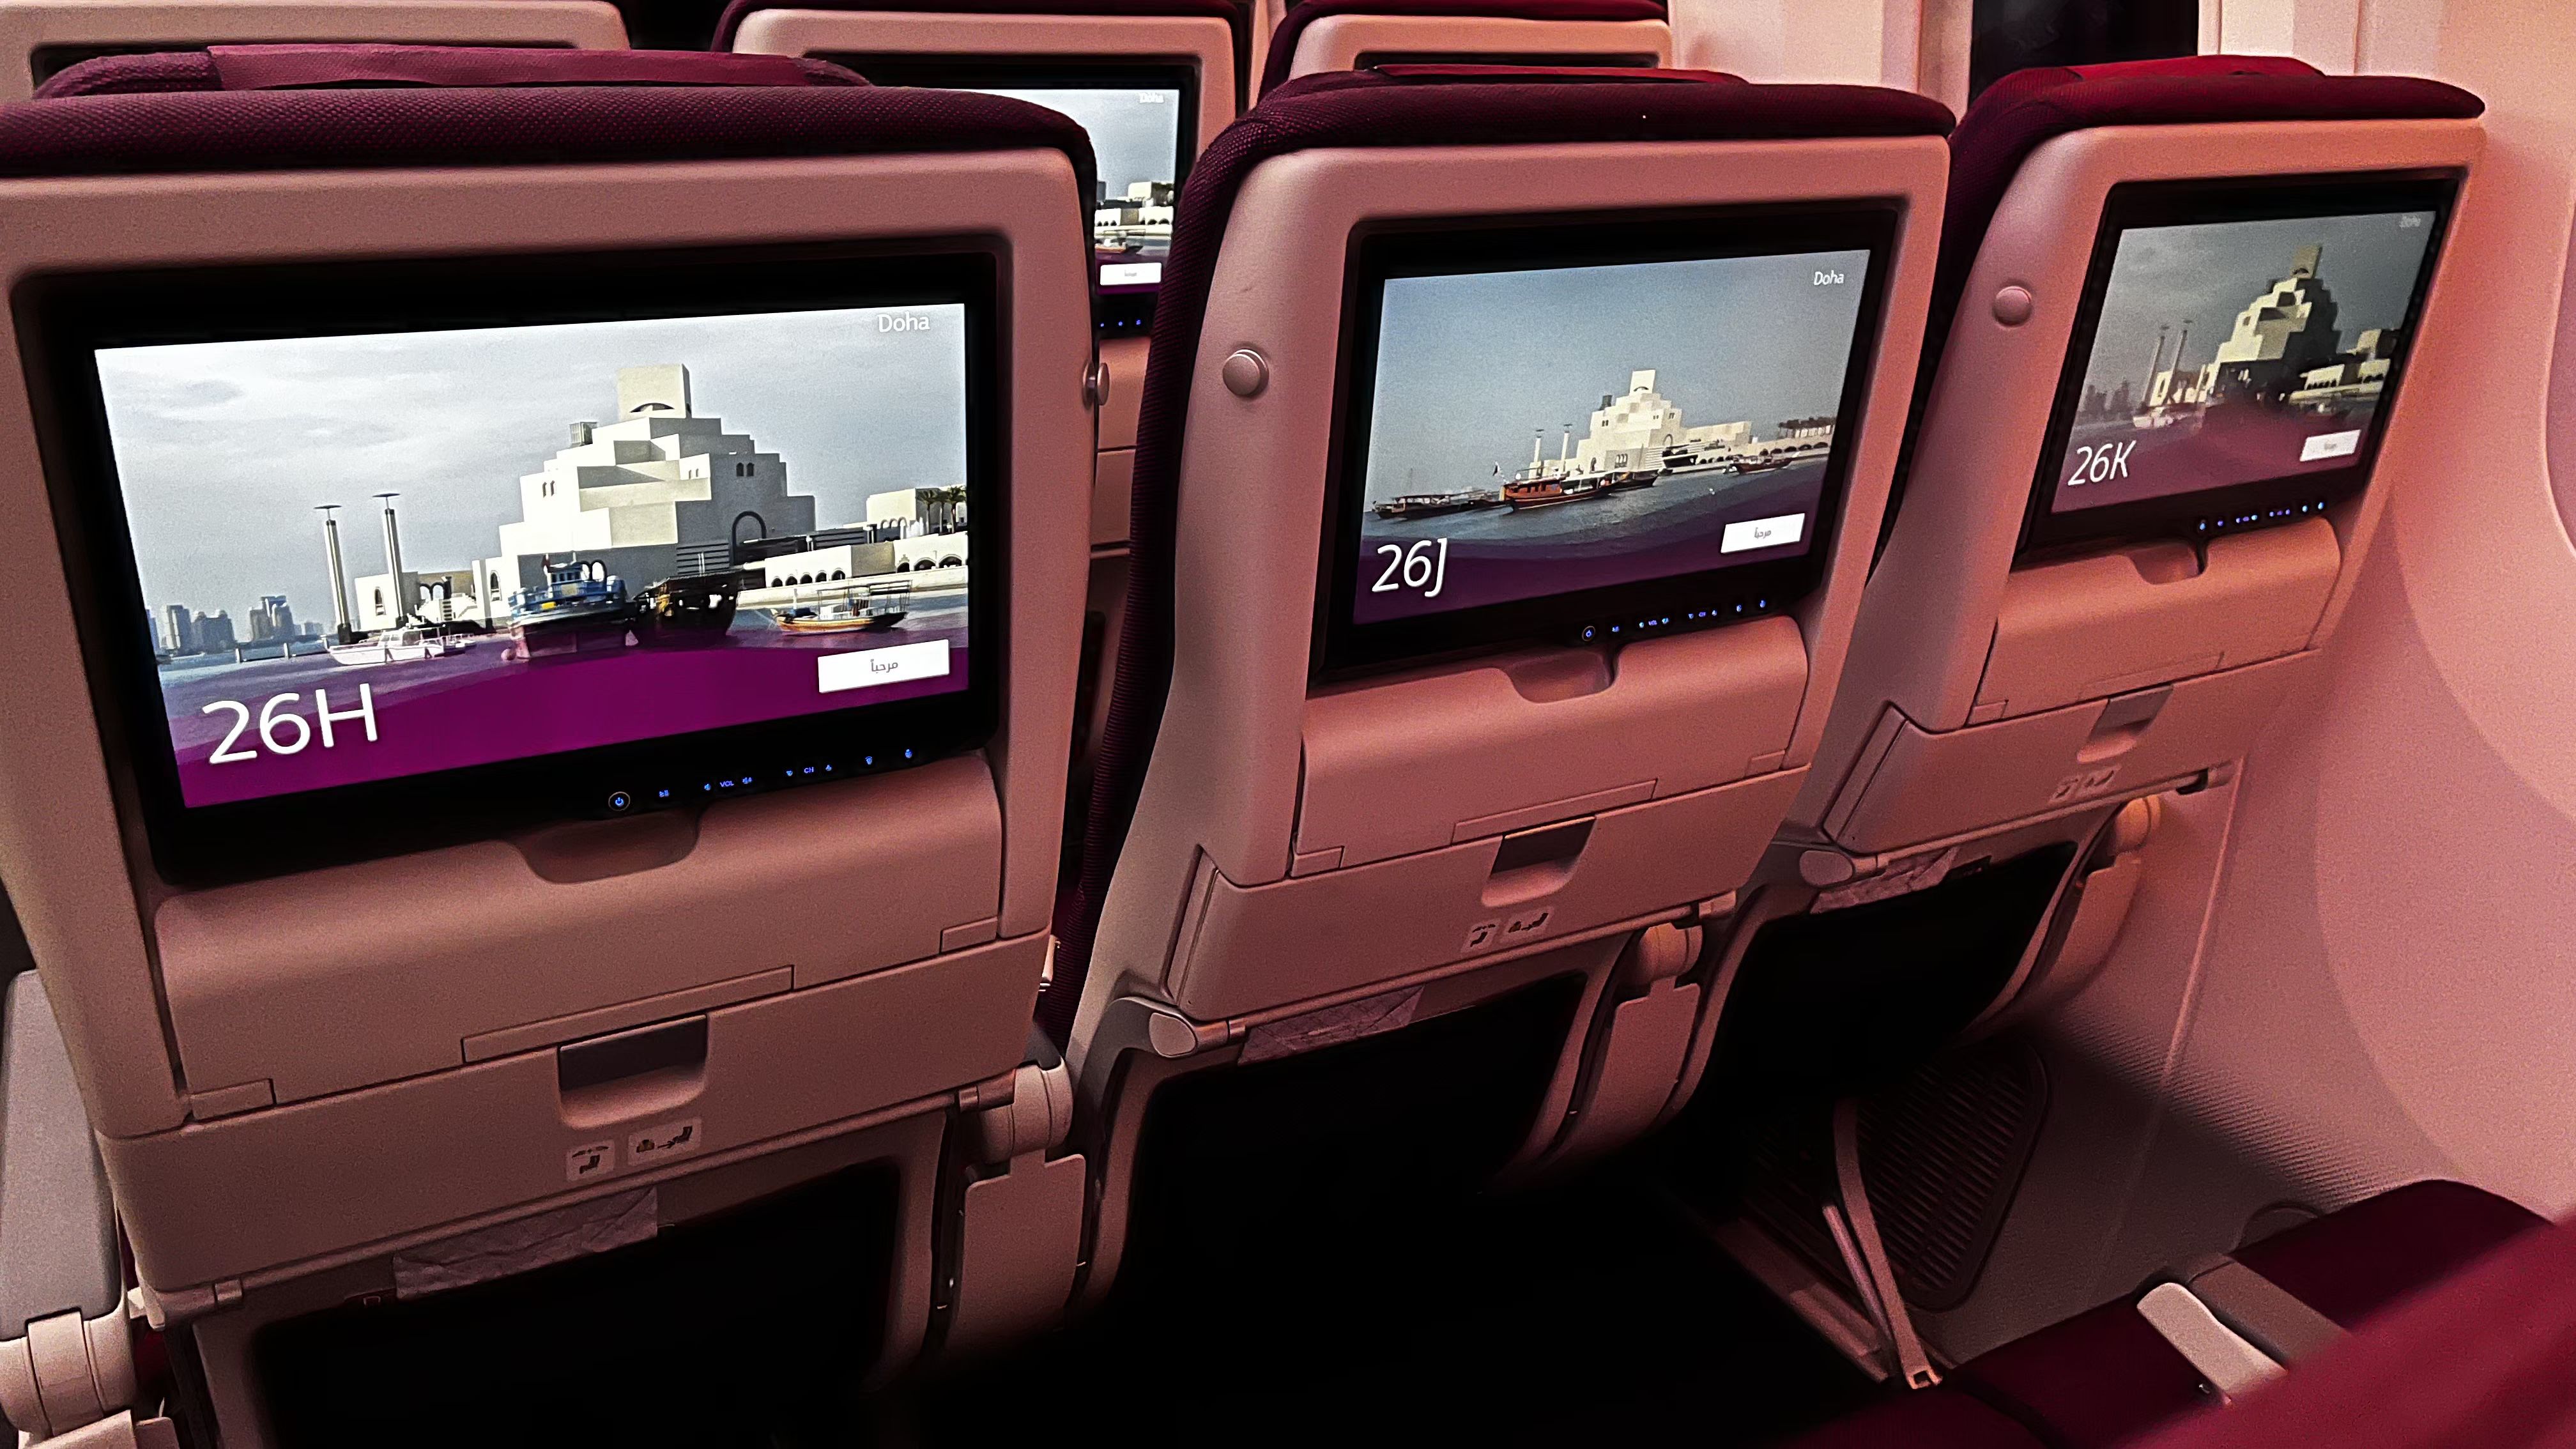 Qatar Airways Economy class featuring the Inflight Entertainment 